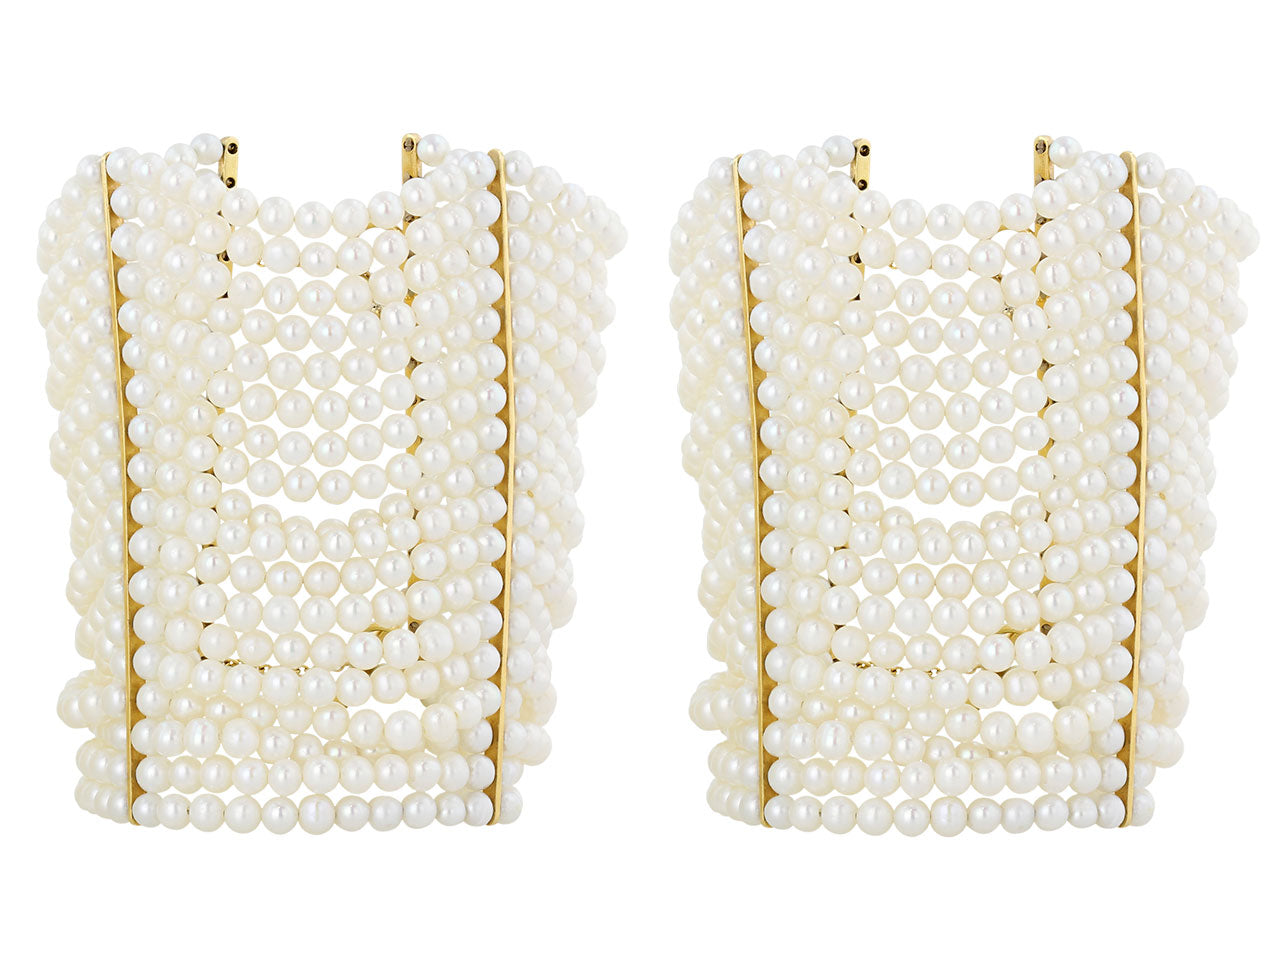 Pair of Wide Pearl Bracelets in 18K Gold